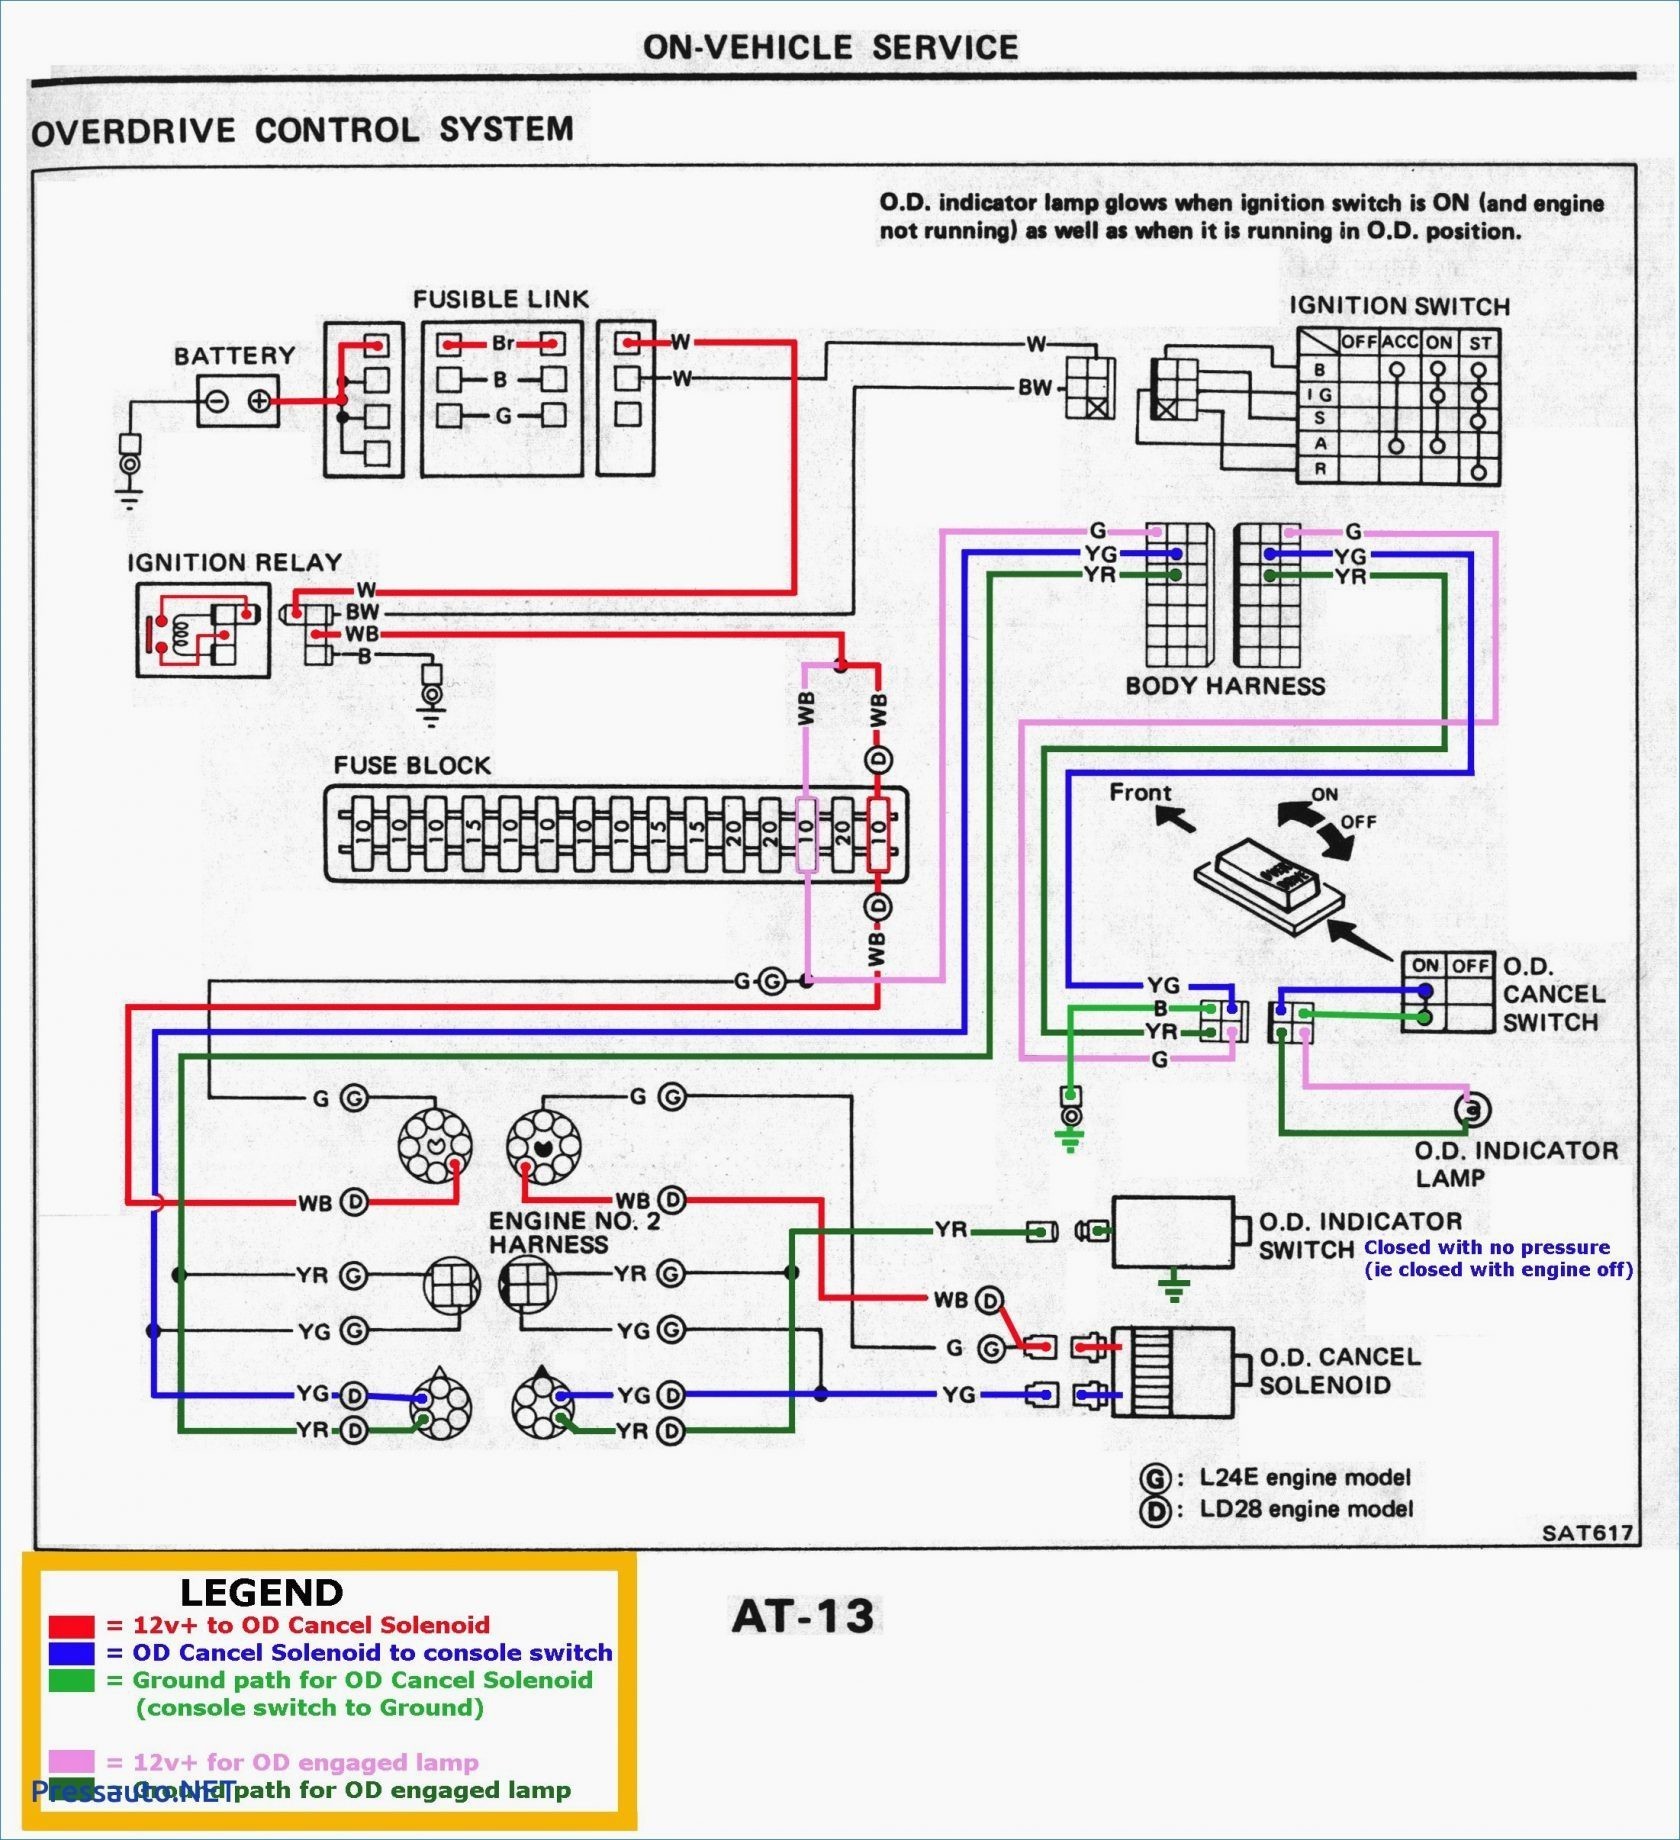 Ford 4 6 Engine Diagram 2 Bmw X5 E53 Parts Diagram Wiring Diagram Inside Of Ford 4 6 Engine Diagram 2